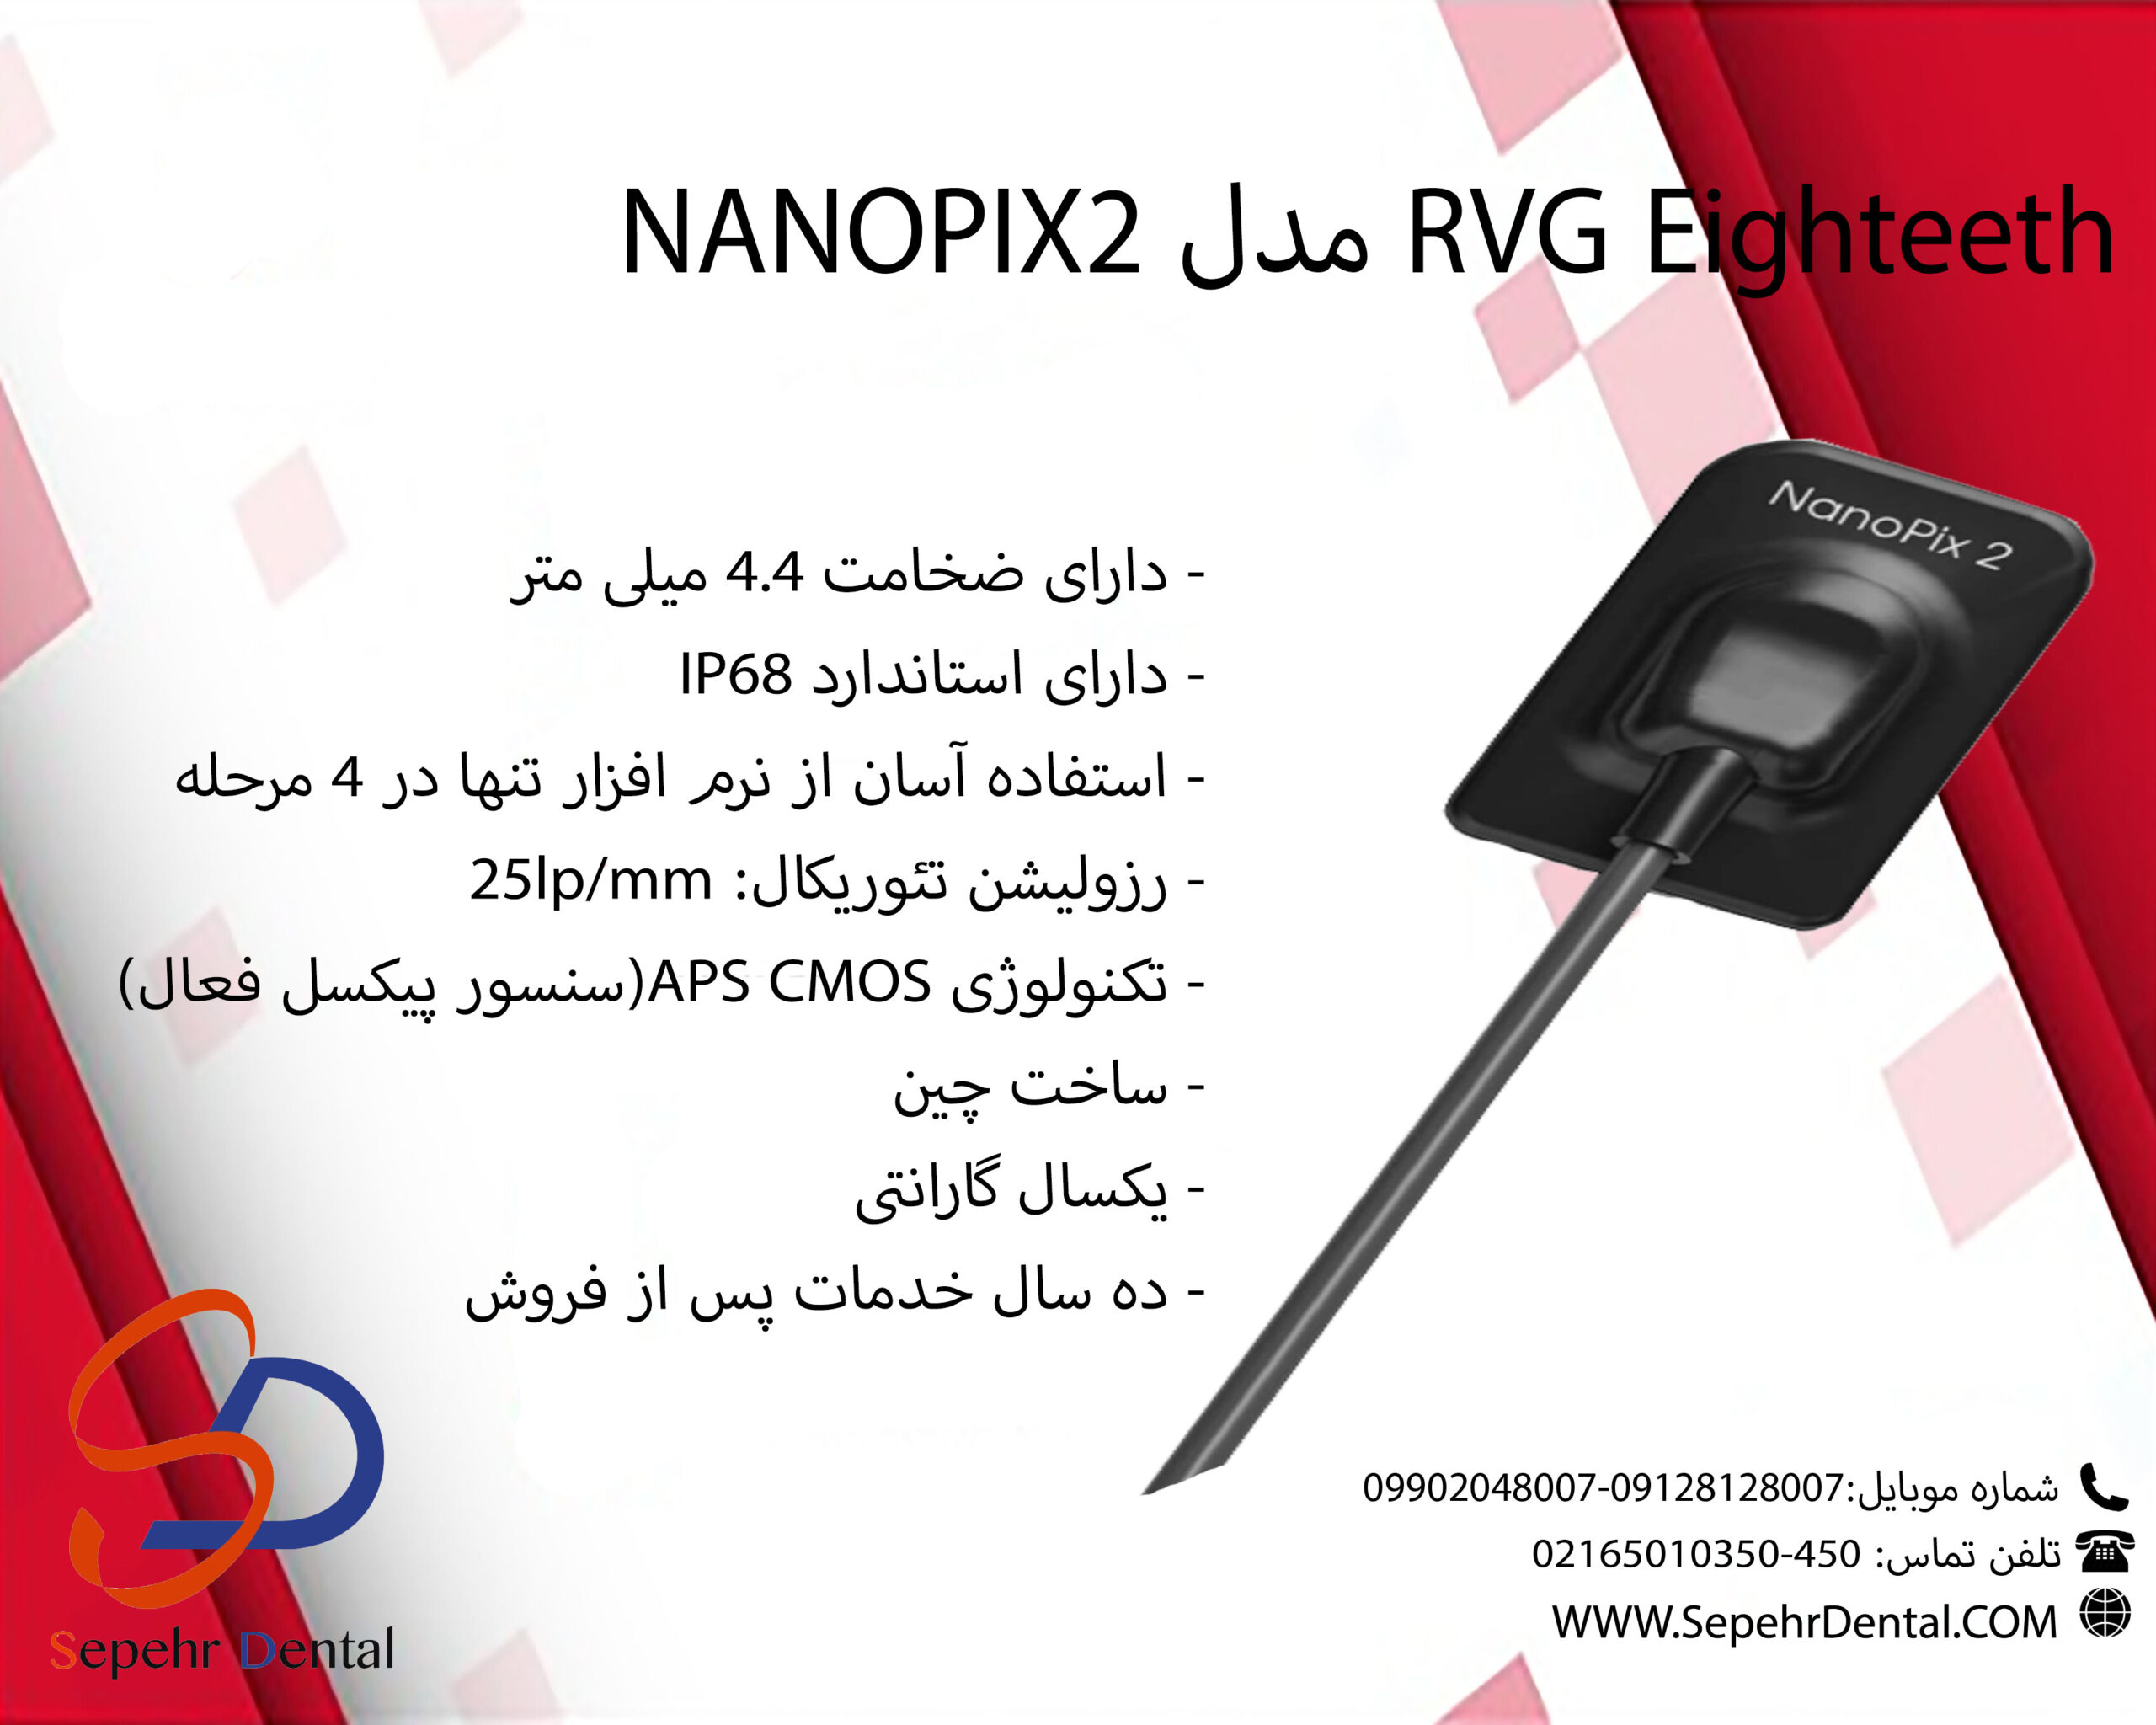 RVG ایتیس Eighteeth مدل NANOPIX2